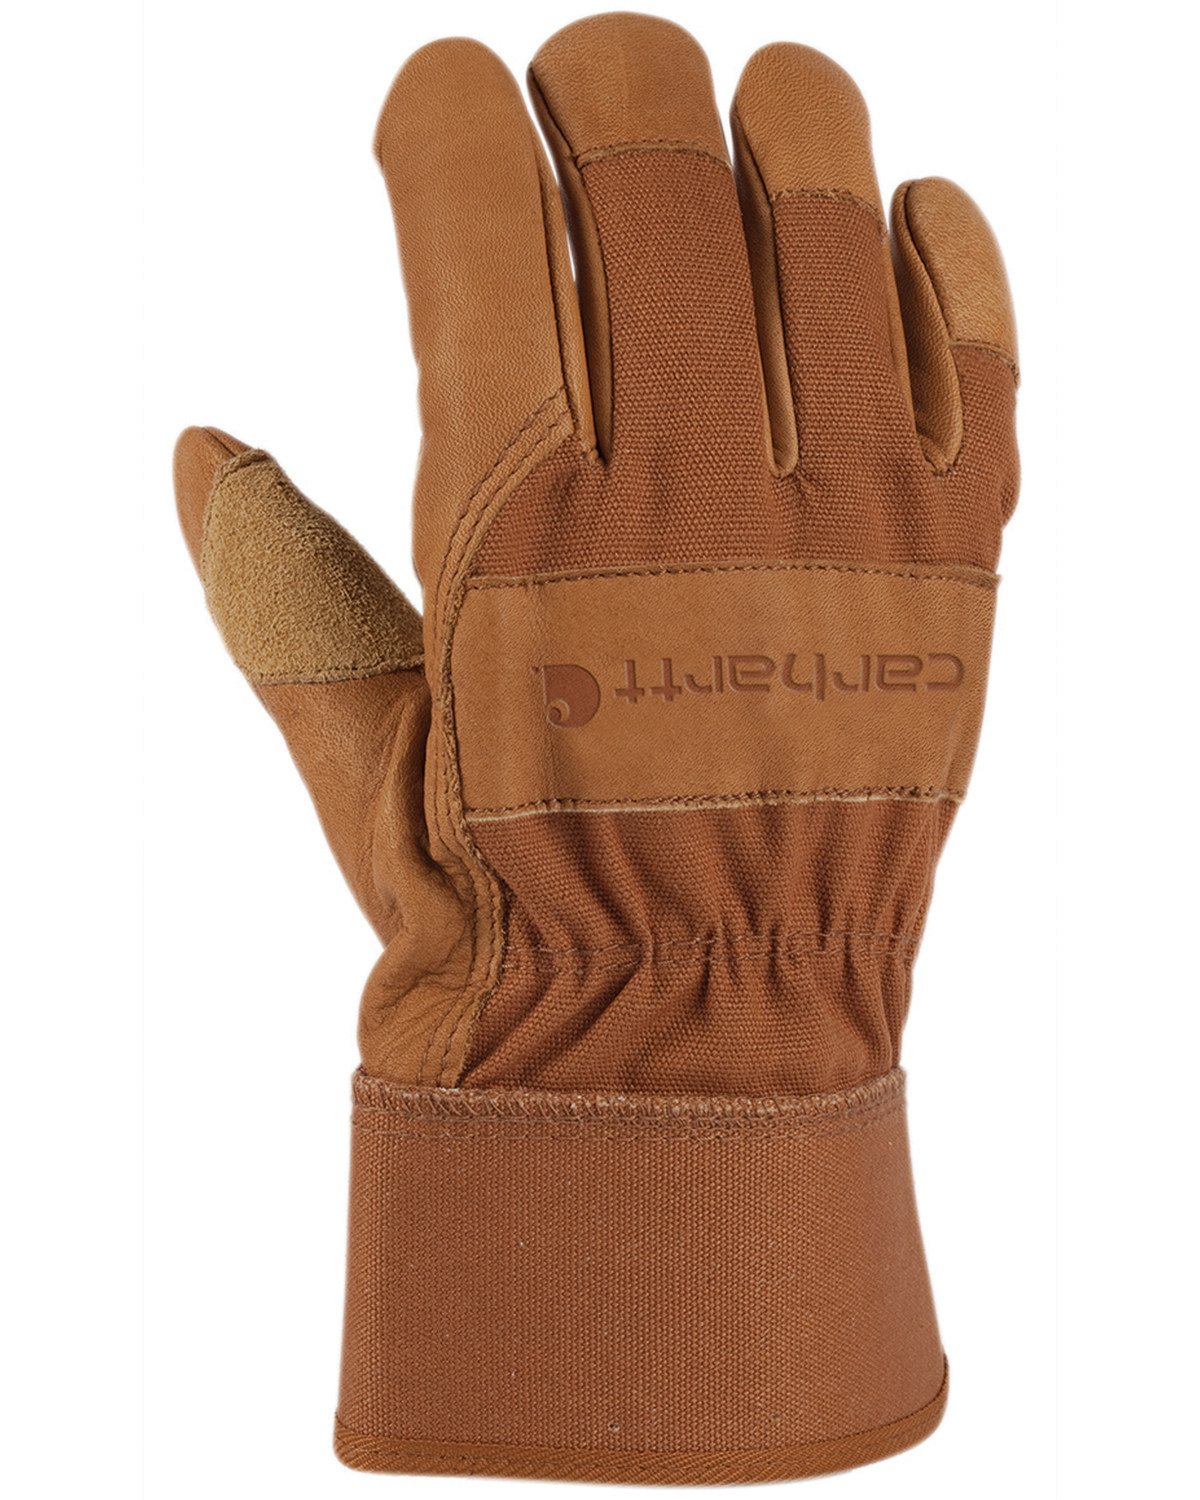 Carhartt Grain Leather Work Gloves